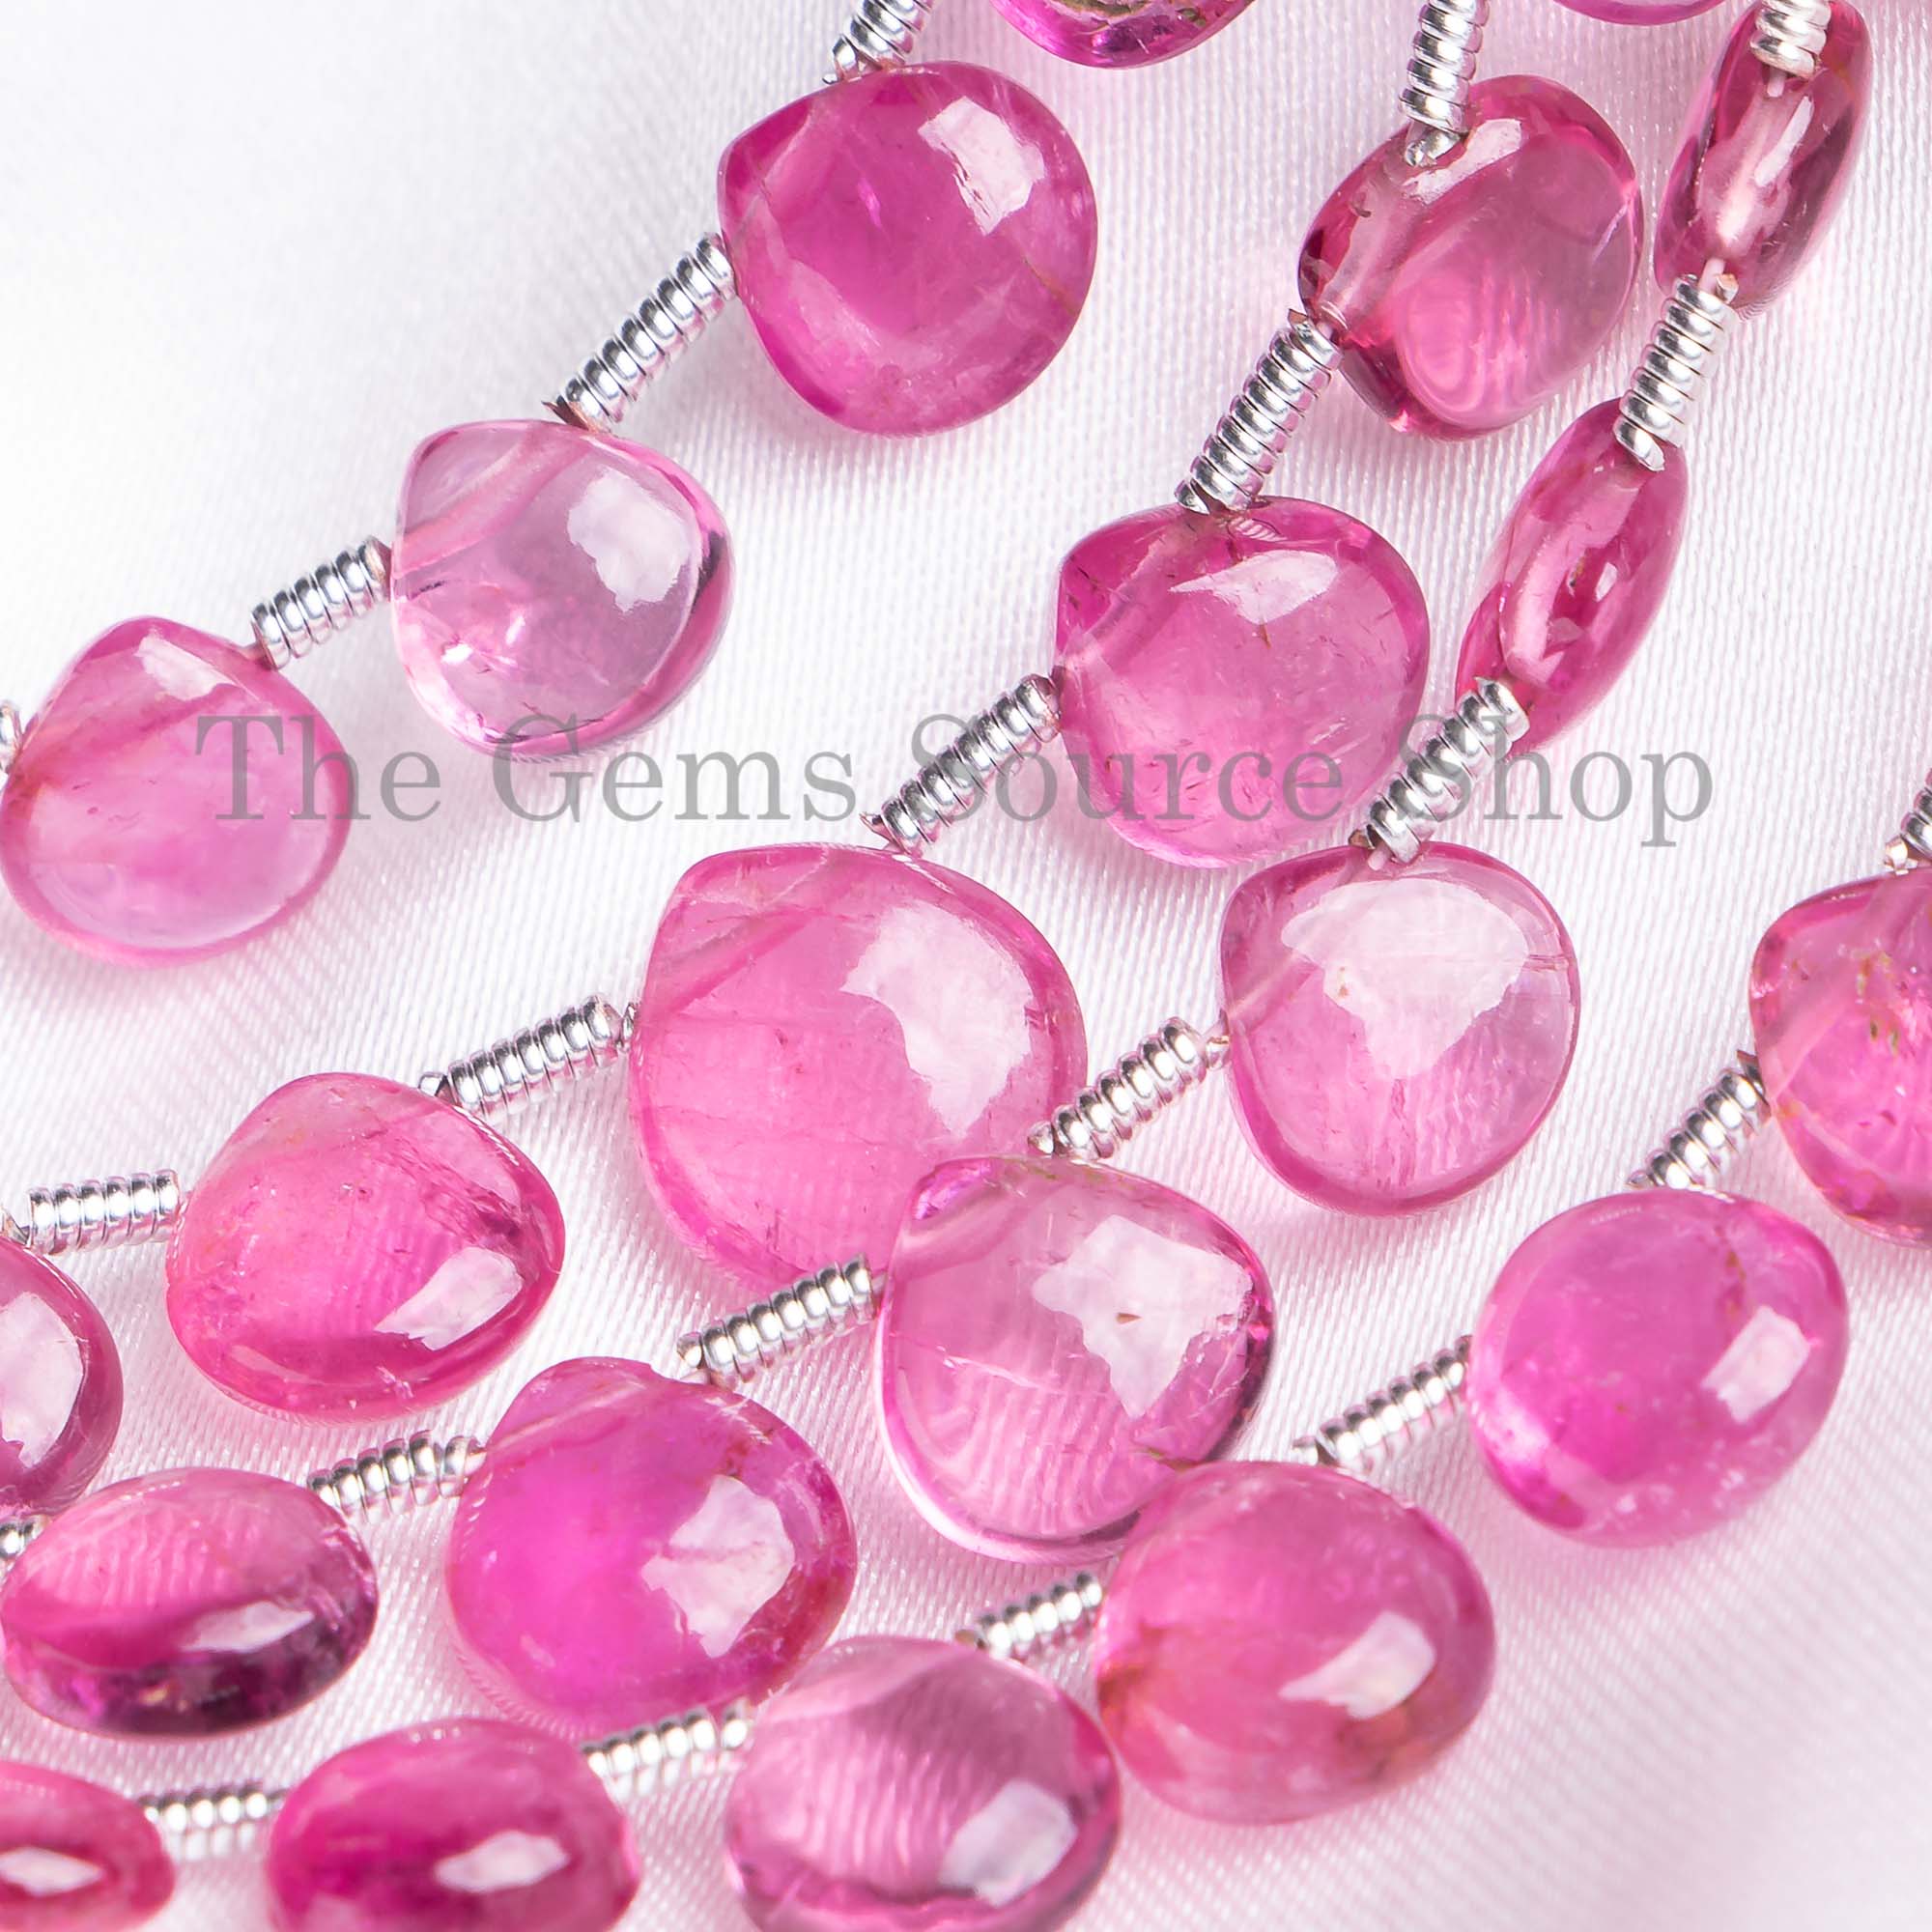 Top Quality Rubellite Tourmaline Beads, Rubellite Tourmaline Smooth Heart Shape Beads